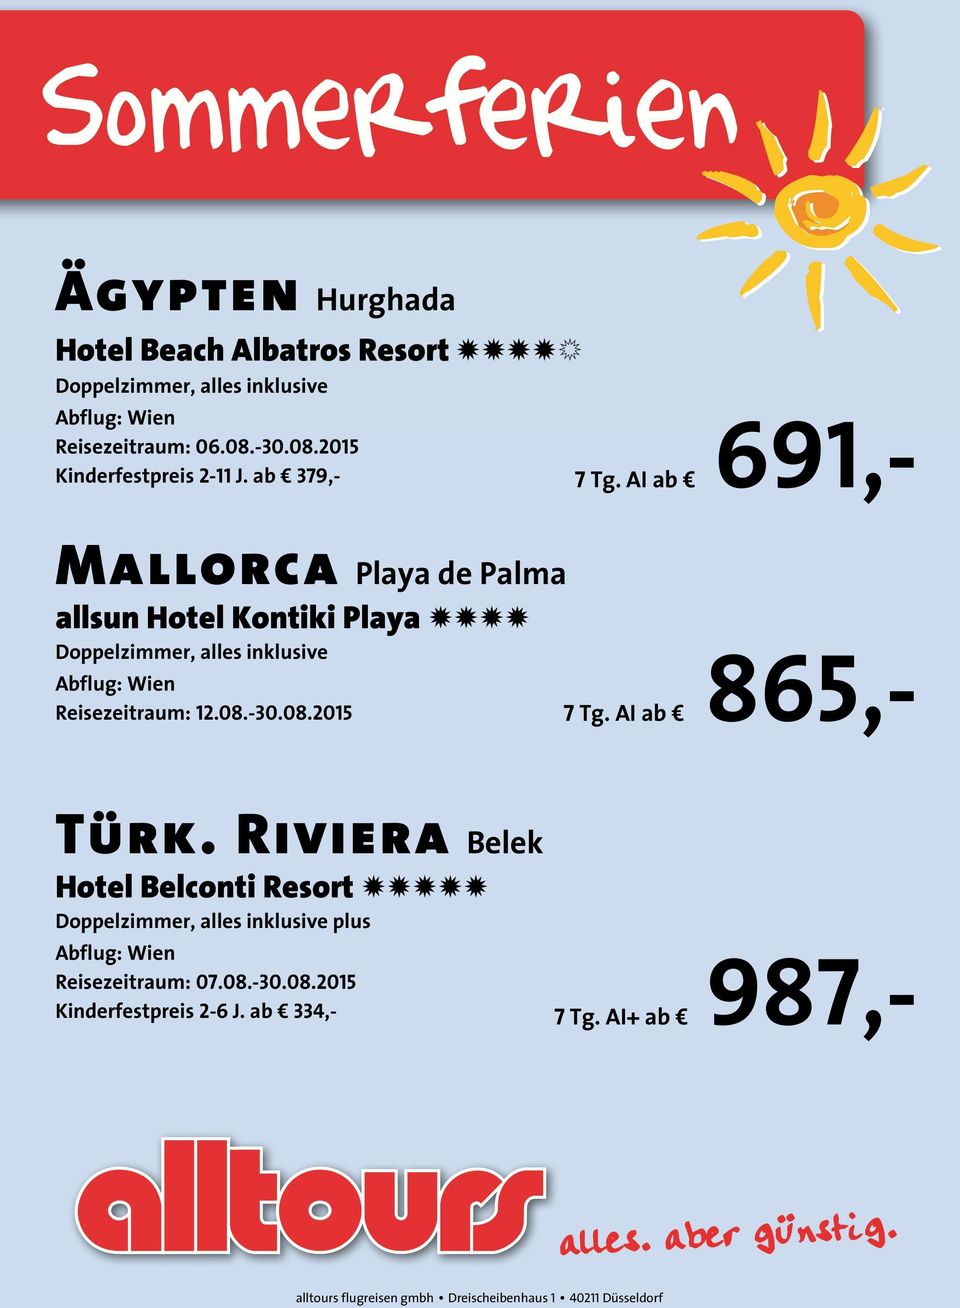 AI ab 691,- Mallorca Playa de Palma allsun Hotel Kontiki Playa NNNN Reisezeitraum: 12.08.-30.